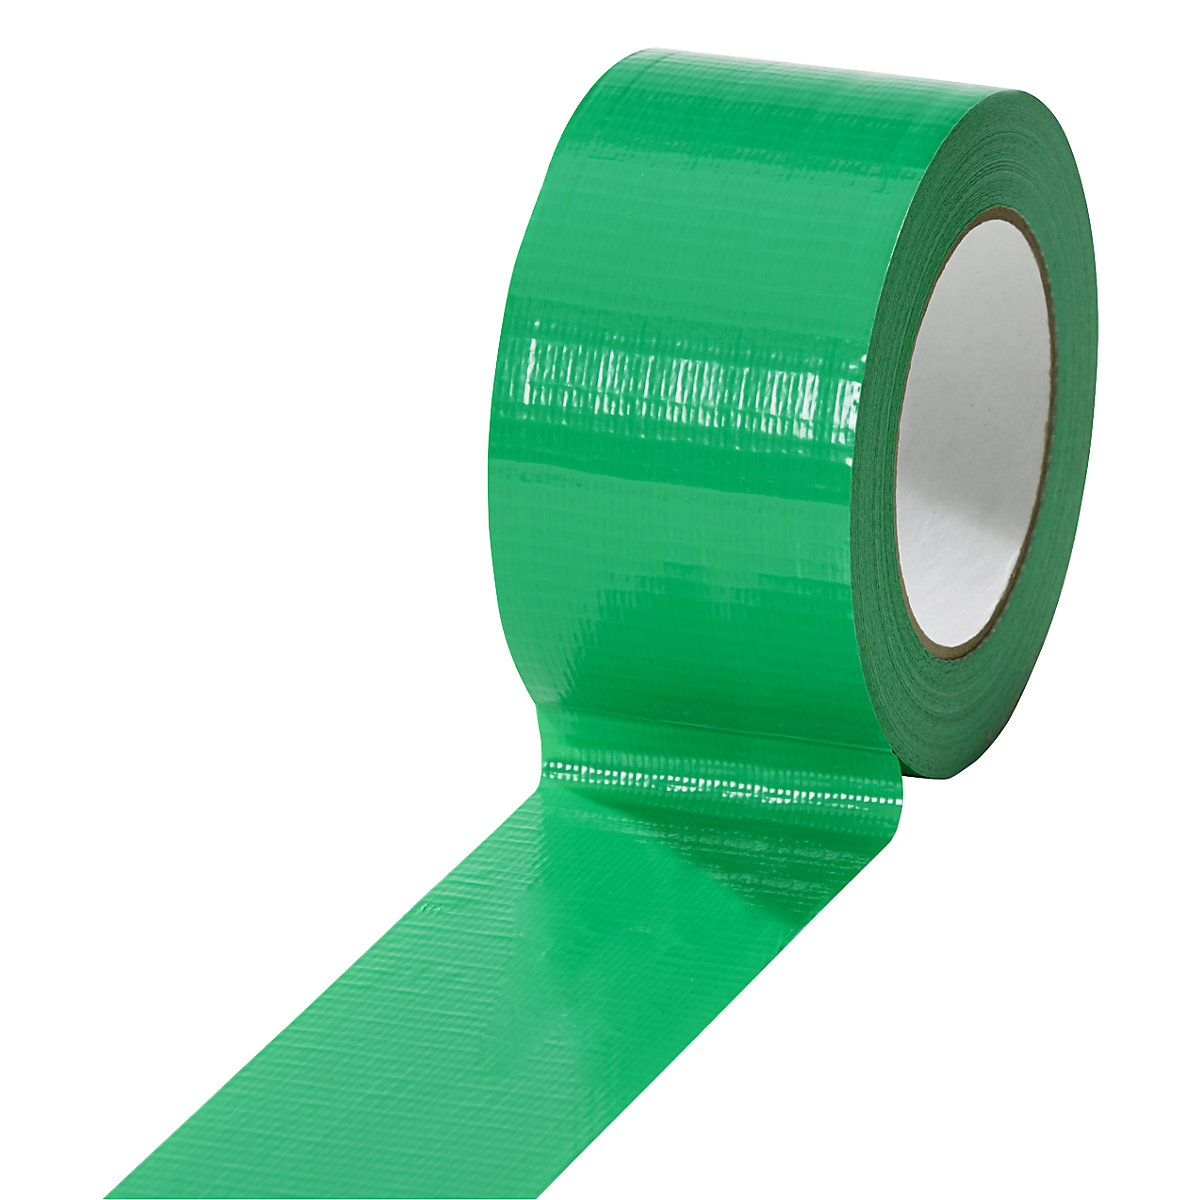 Textielband, in verschillende kleuren, VE = 18 rollen, groen, bandbreedte 50 mm-8